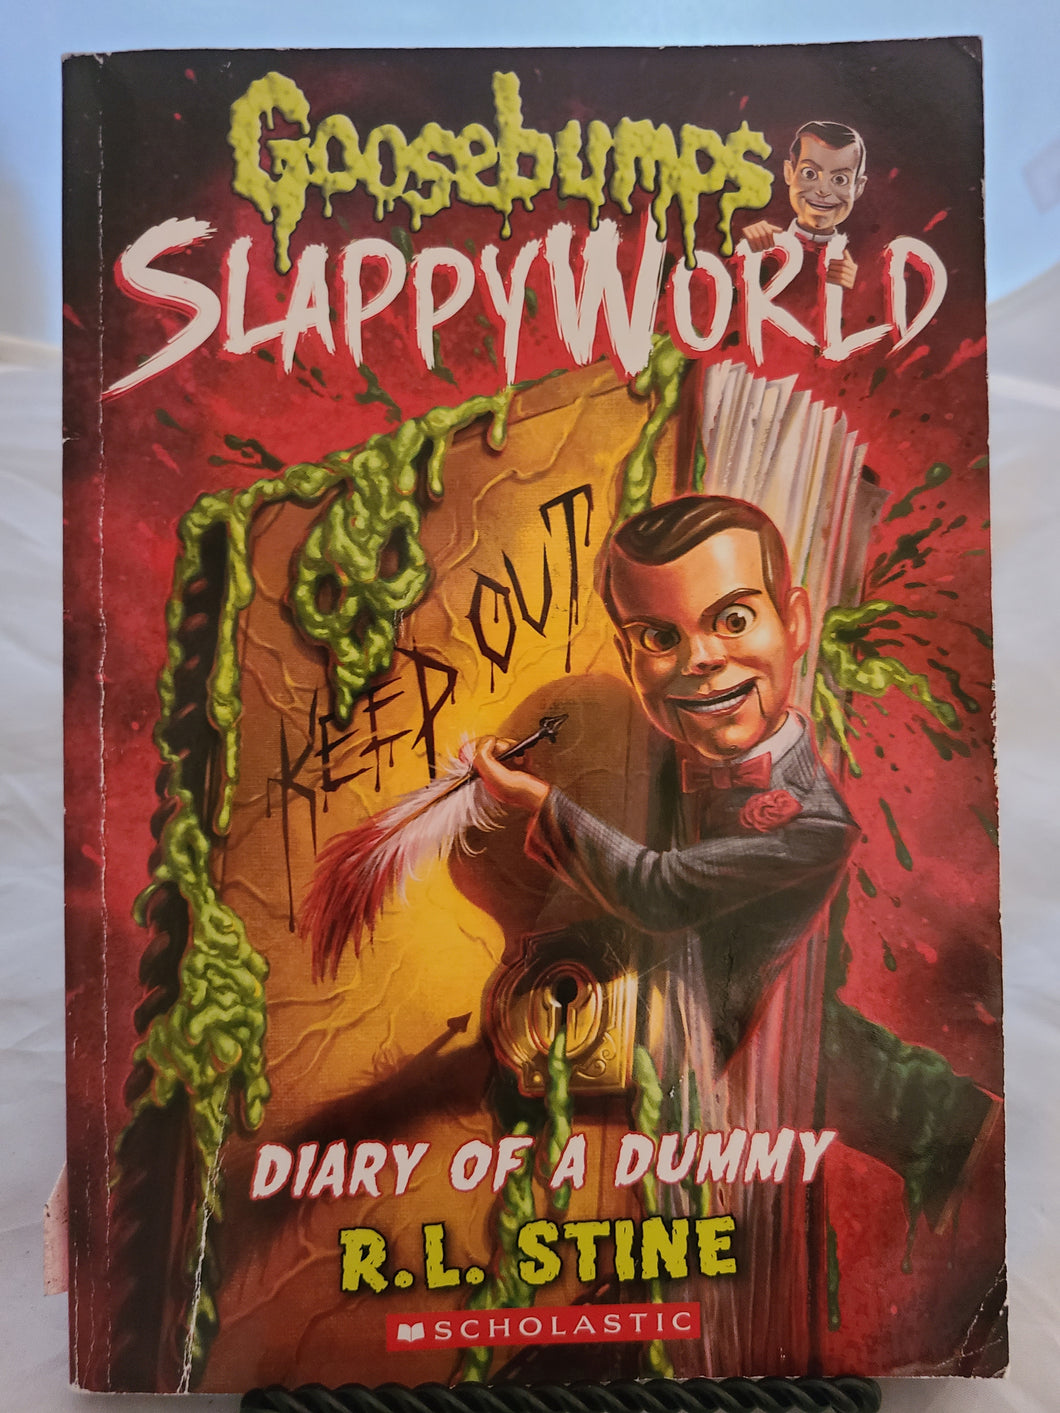 Goosebumps: SlappyWorld #10 - Diary of a Dummy